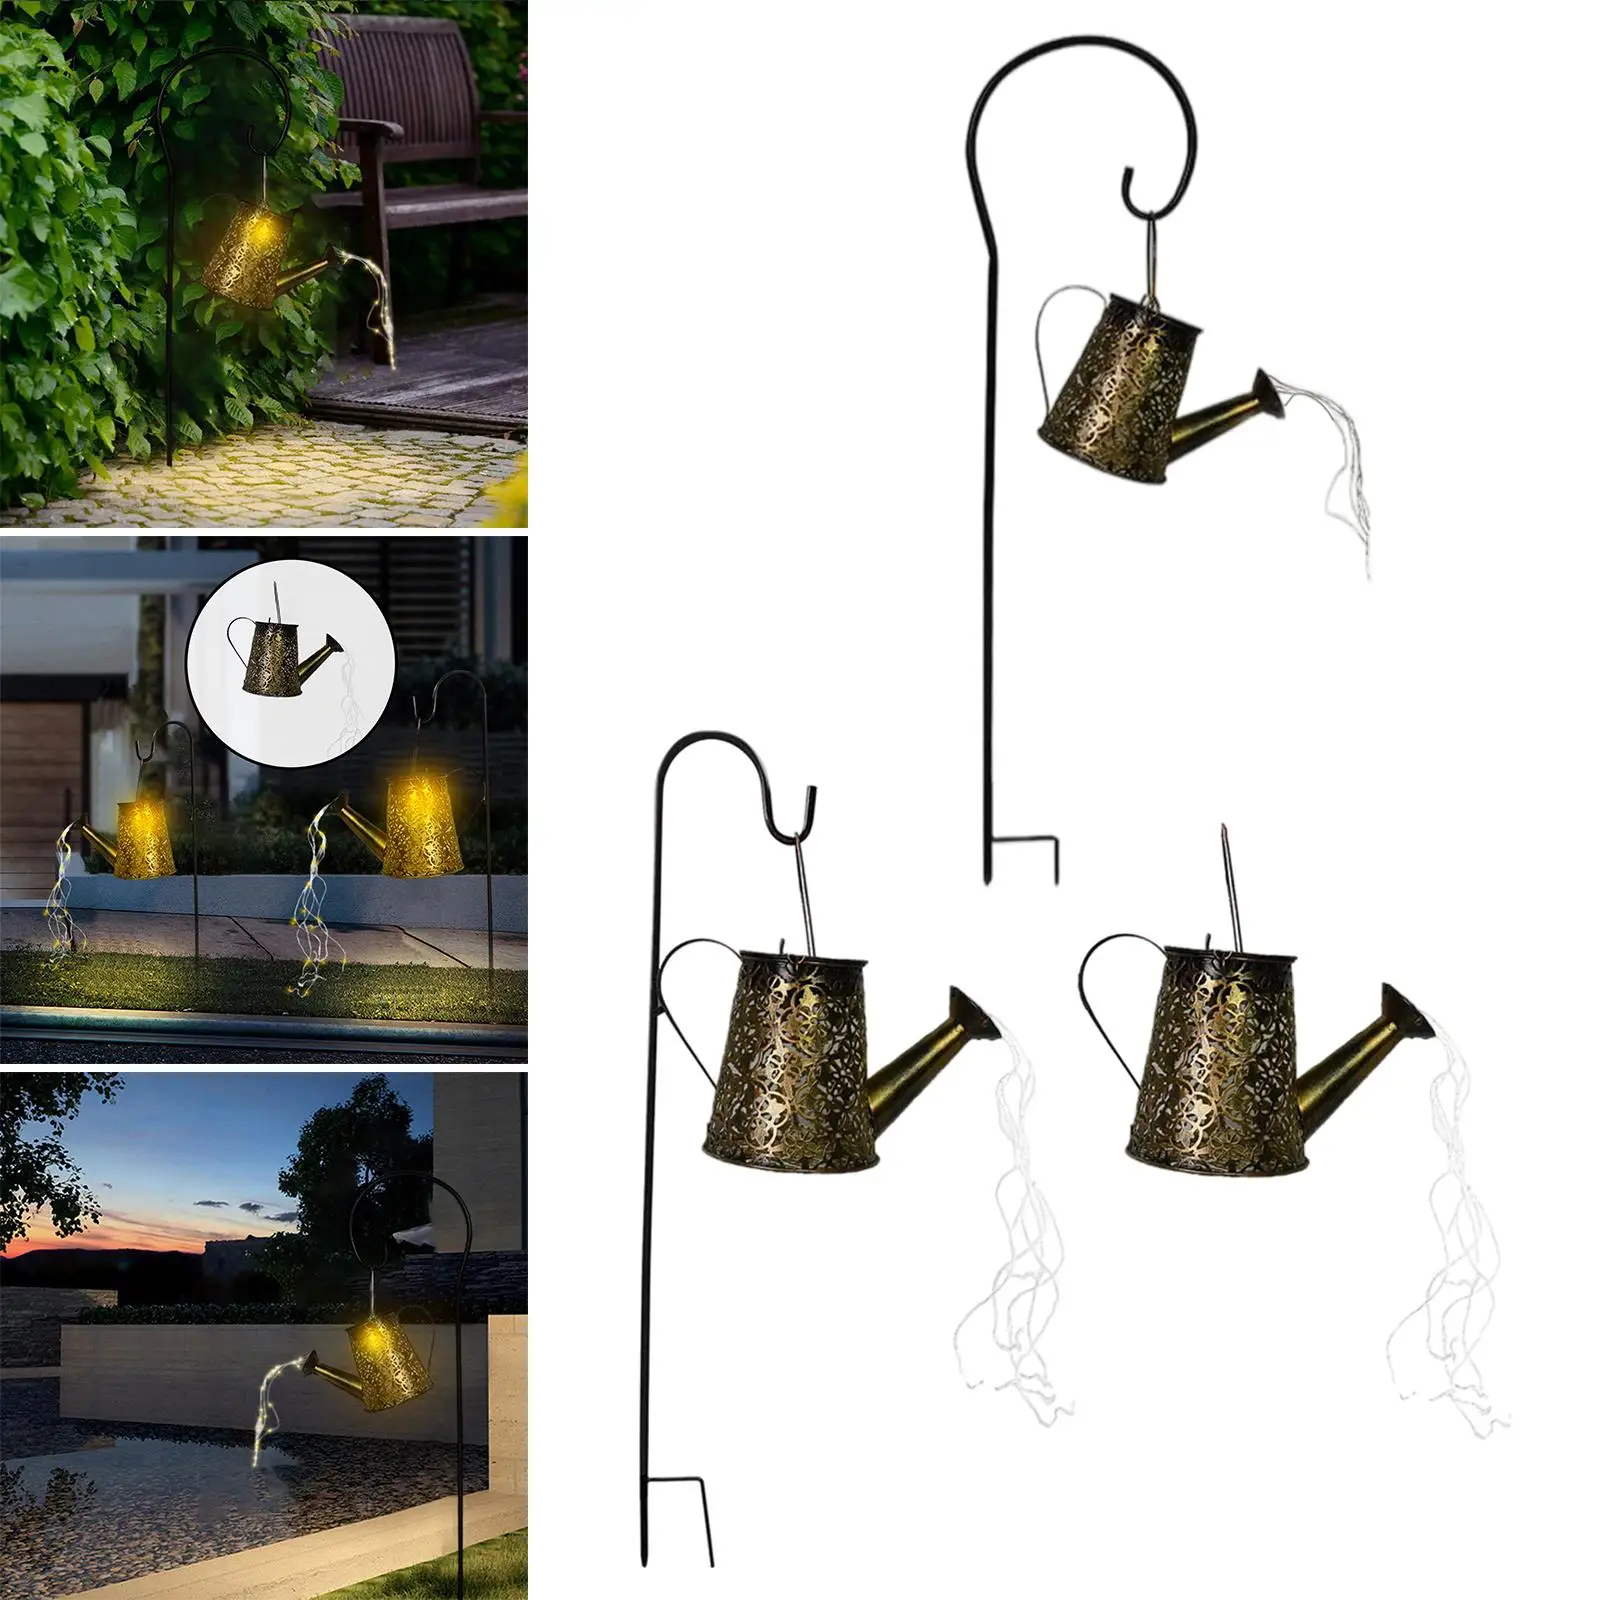 Solar Watering Can Light Solar Lamp LED Shower Solar Fairy Light String Garden Yard Lawn Art Outdoor Christmas Decorations